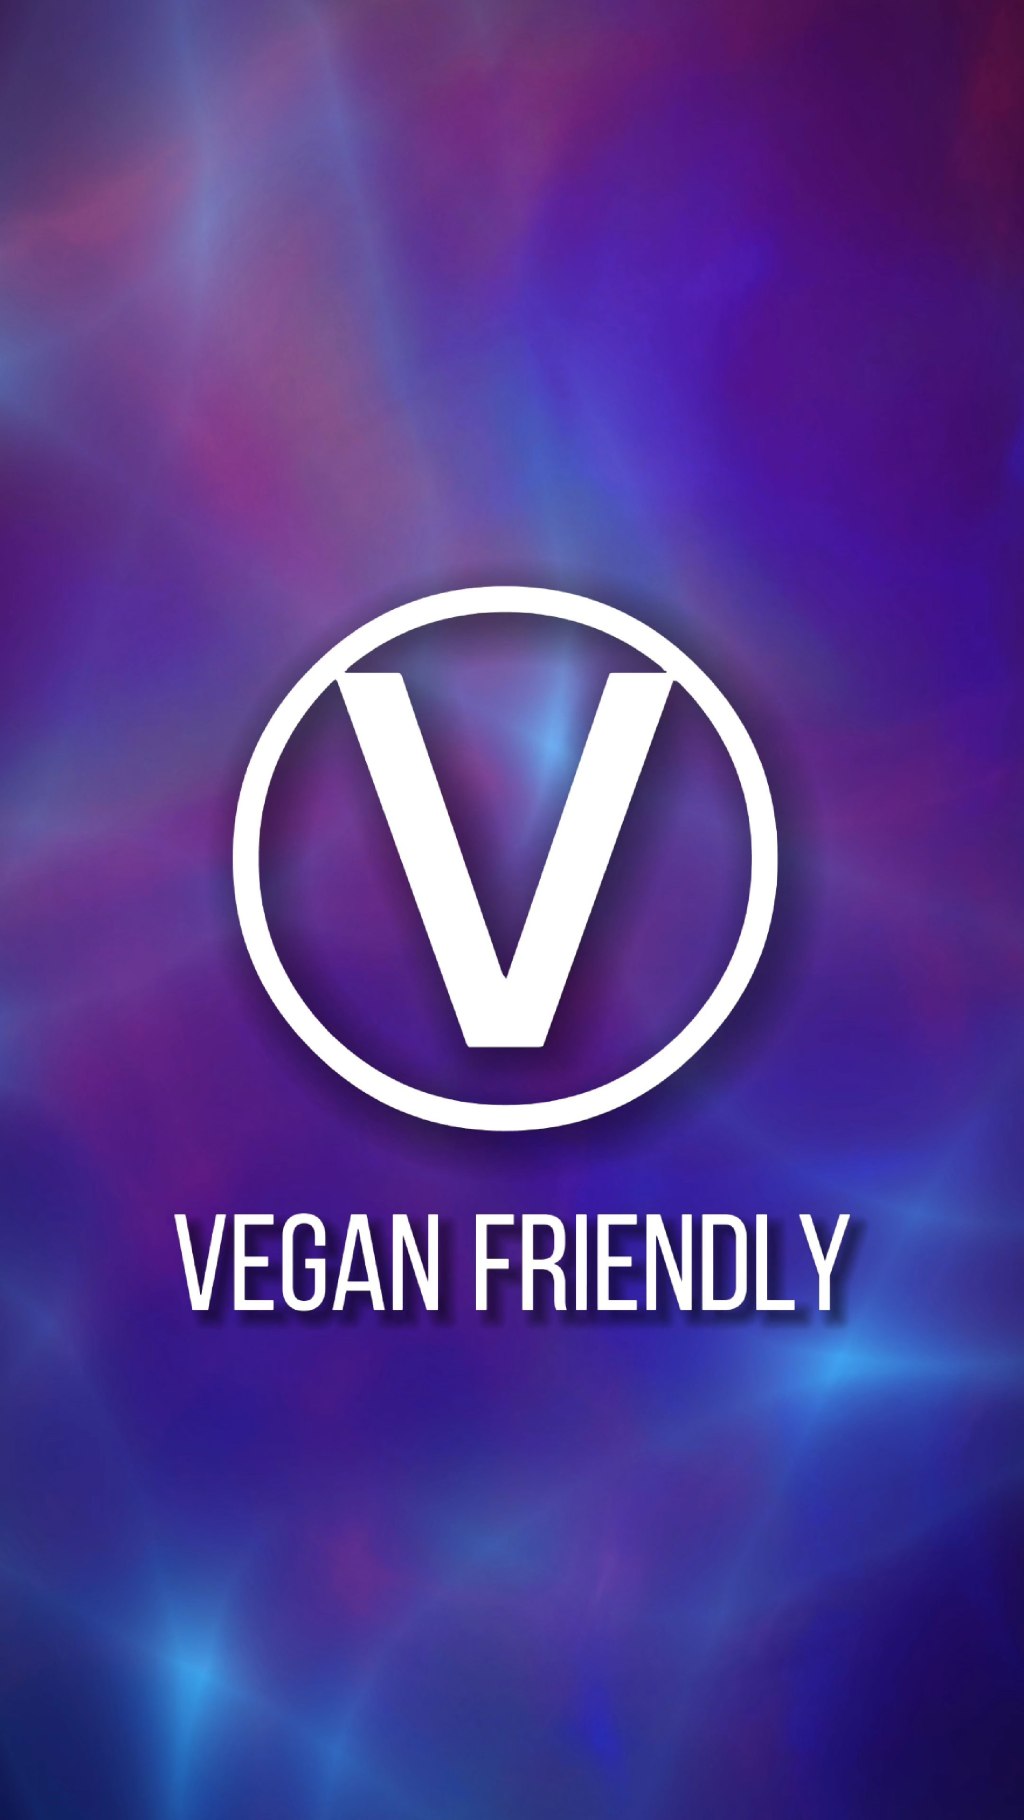 Cool KIng® “Vegan, Non-dairy Options” Advertisement